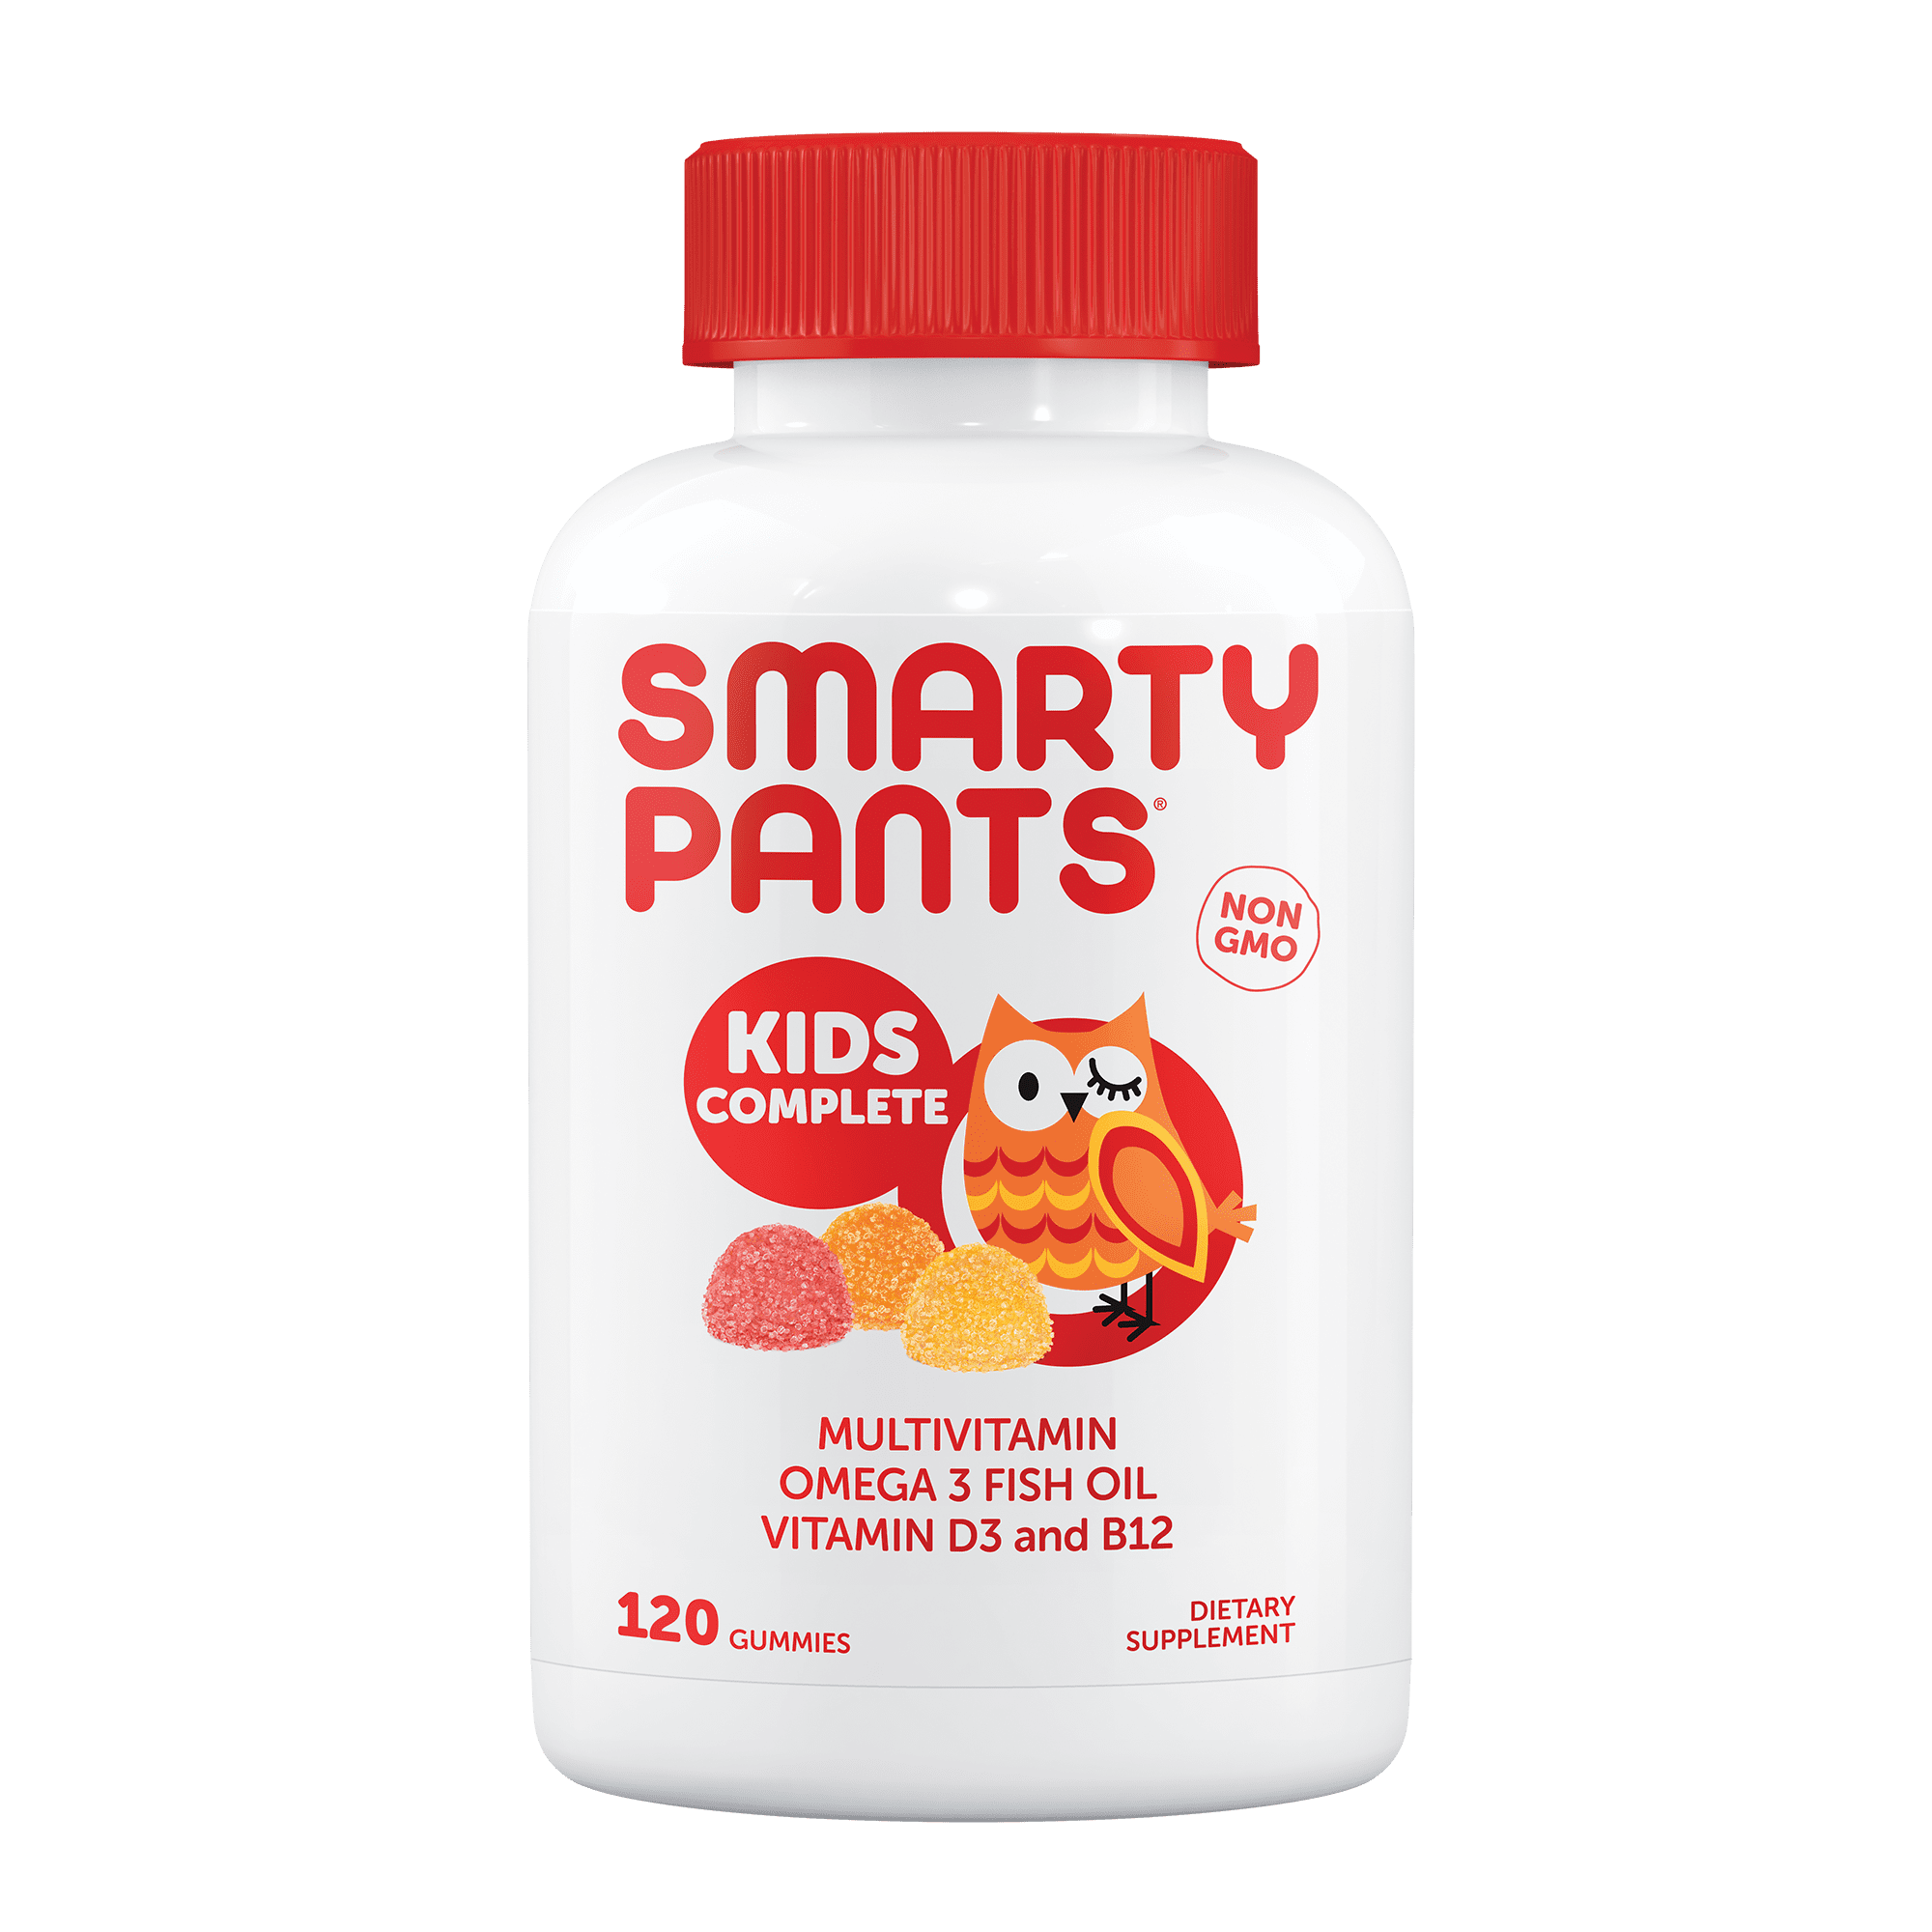 Smarty pants vitamins